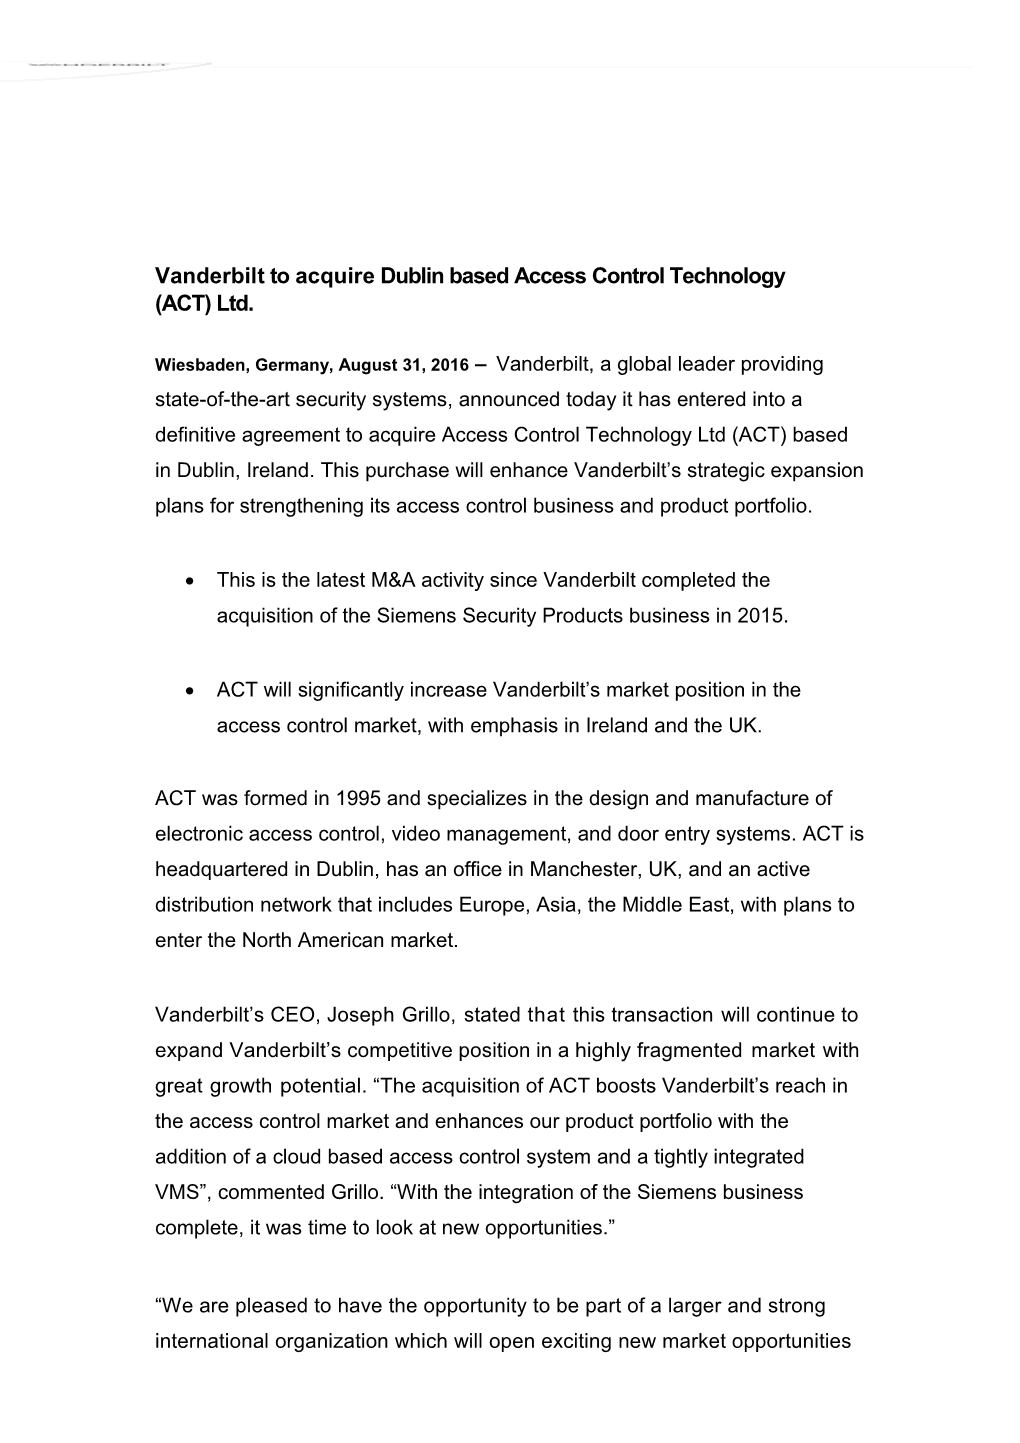 Vanderbilt to Acquire Dublin Based Access Control Technology (ACT) Ltd